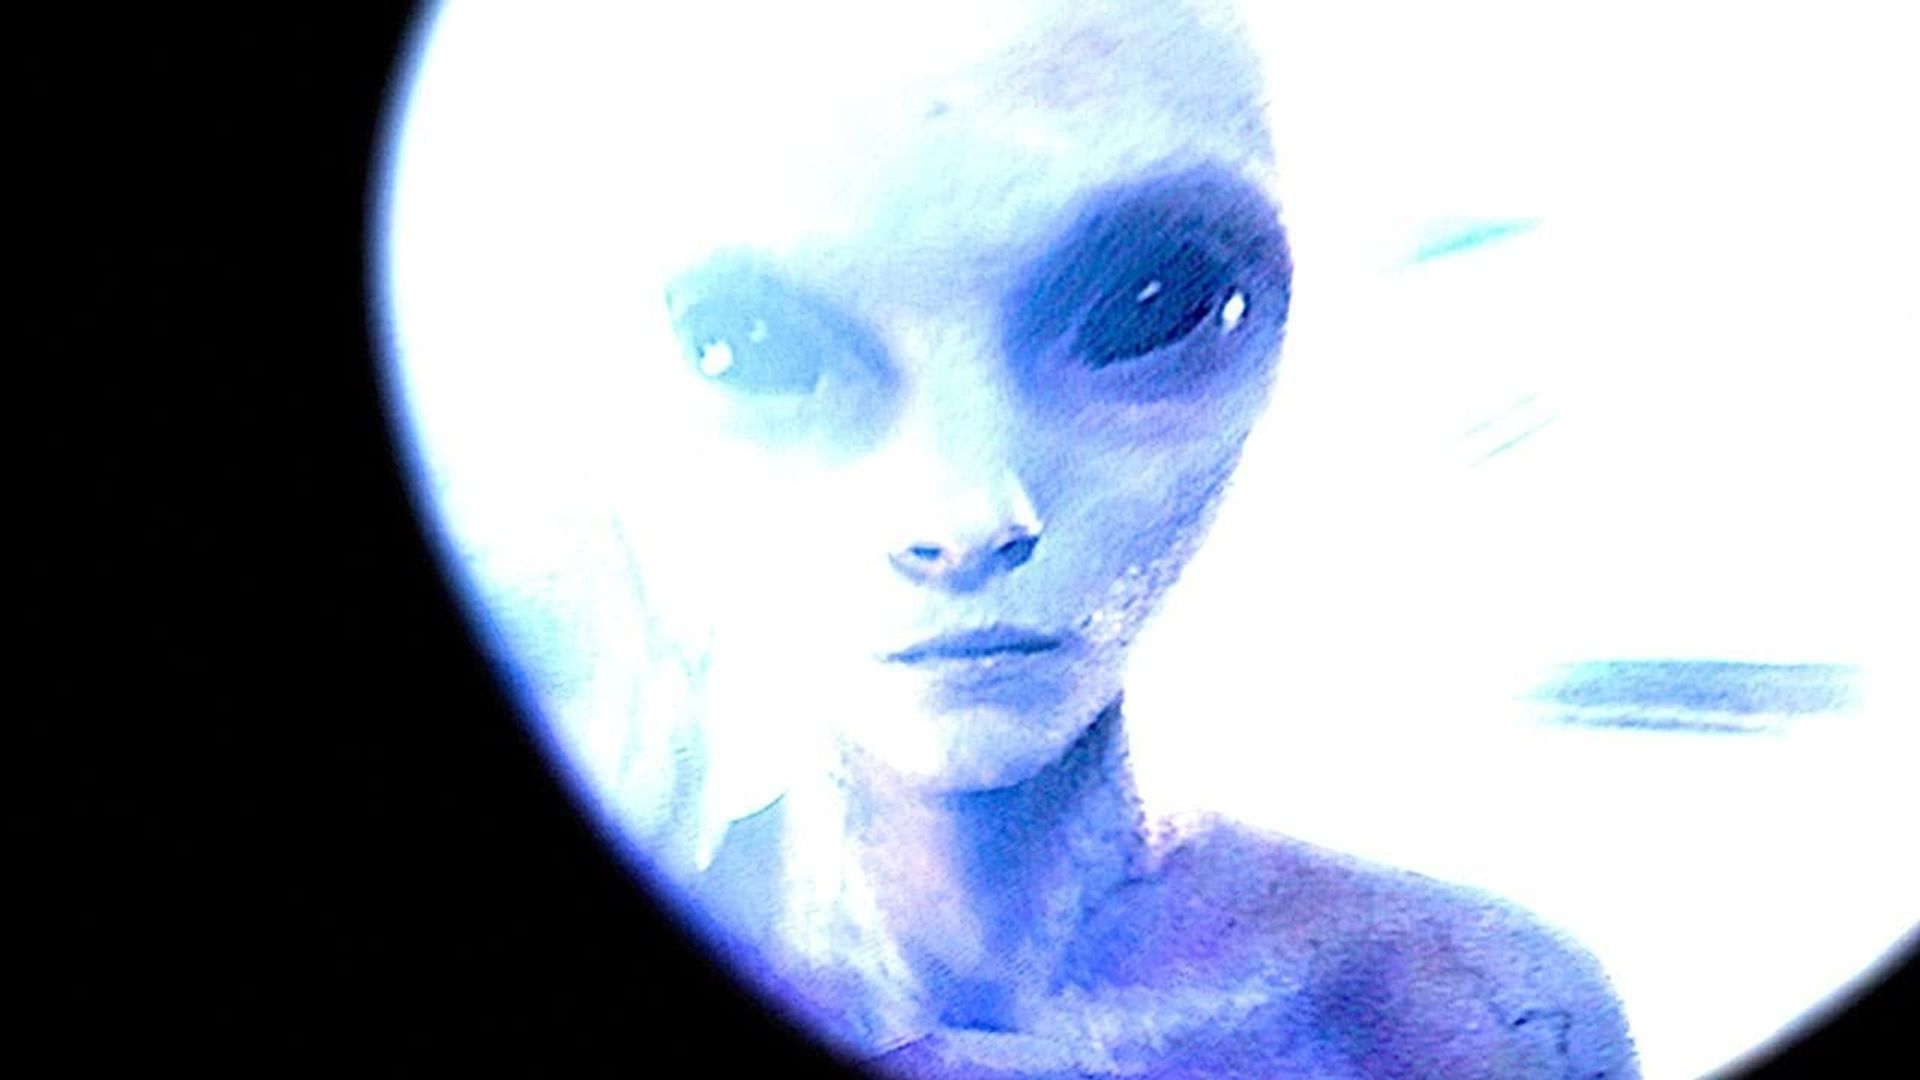 The Alien Report background